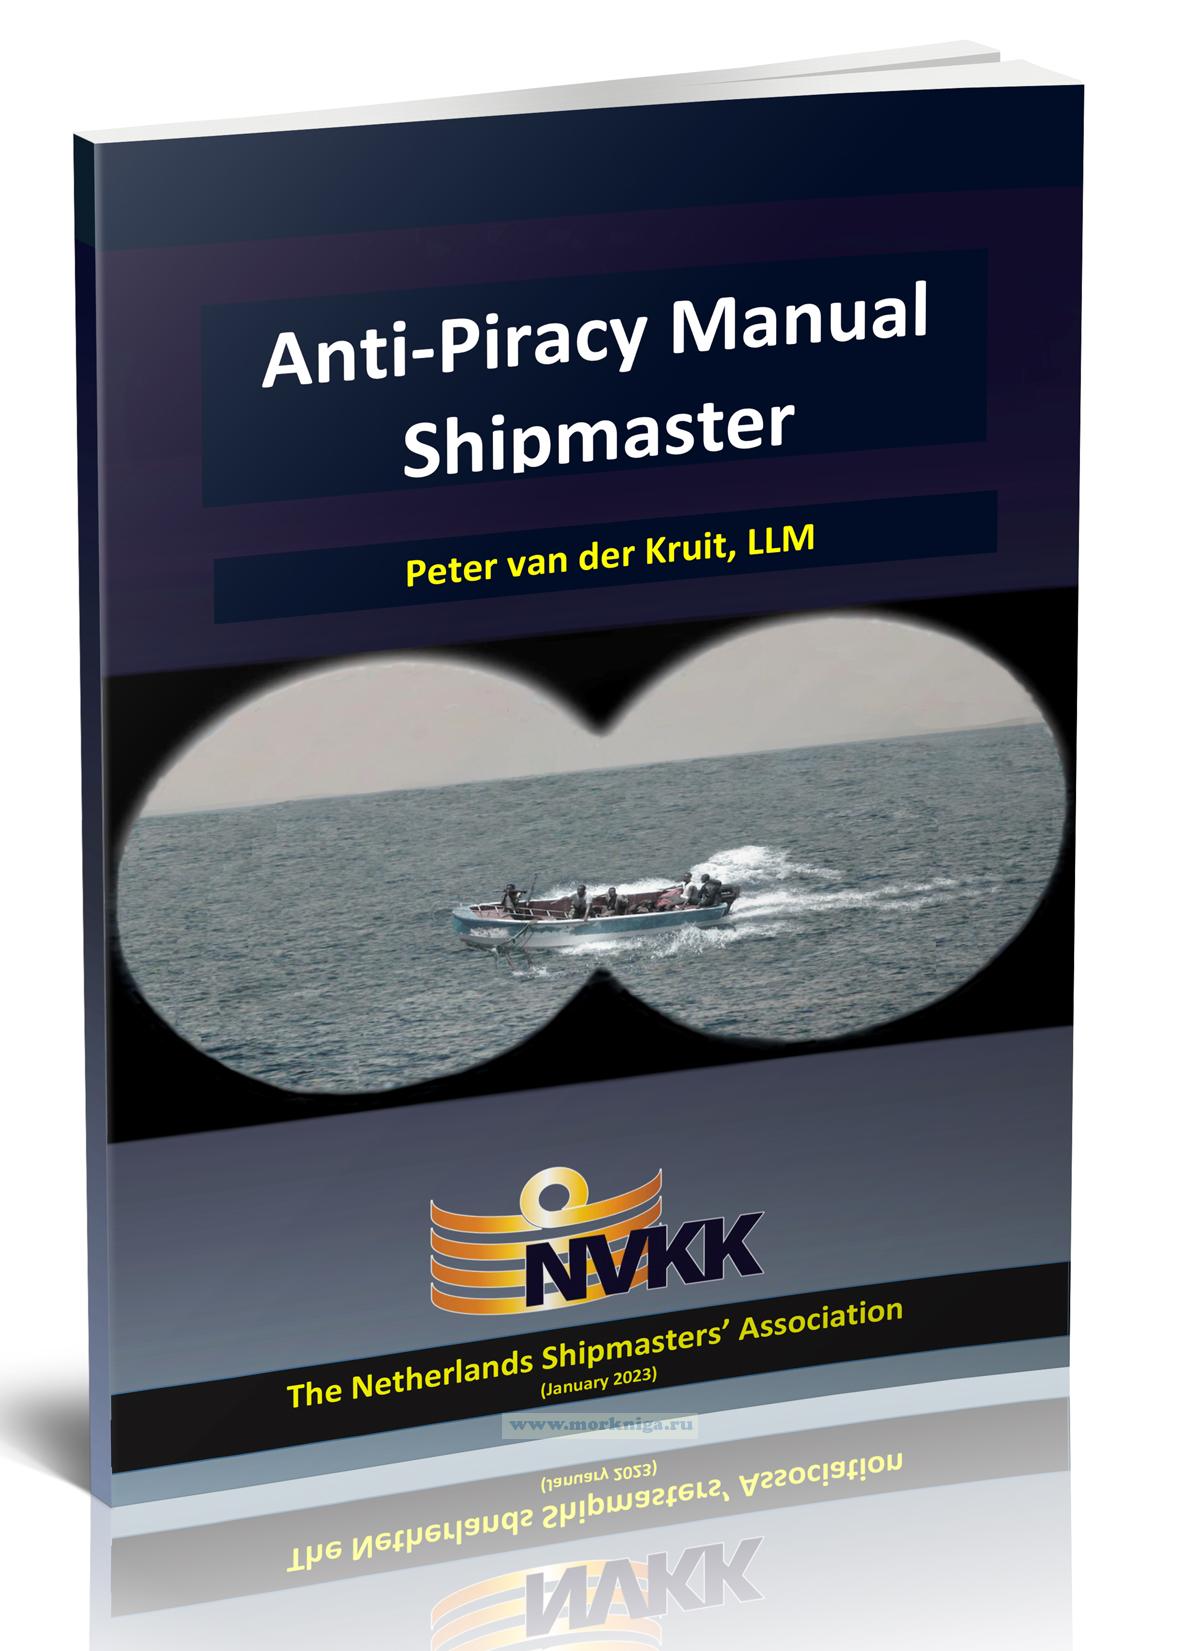 Anti-Piracy Manual Shipmaster/Руководство по борьбе с пиратством для капитана судна